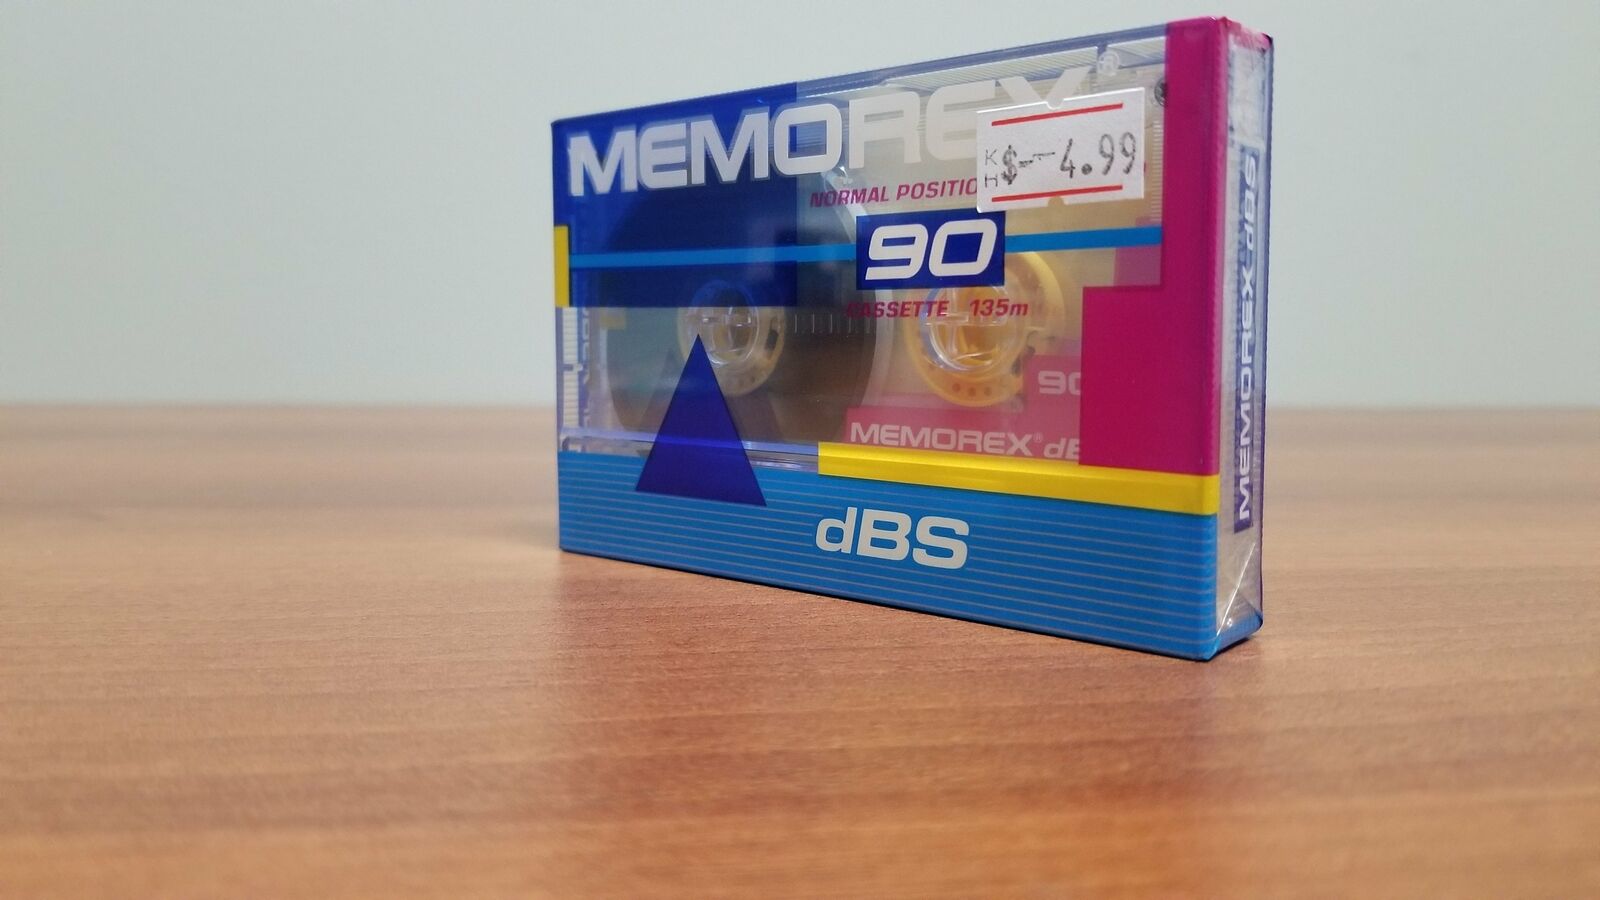 Memorex Dbs 90 Cassettes